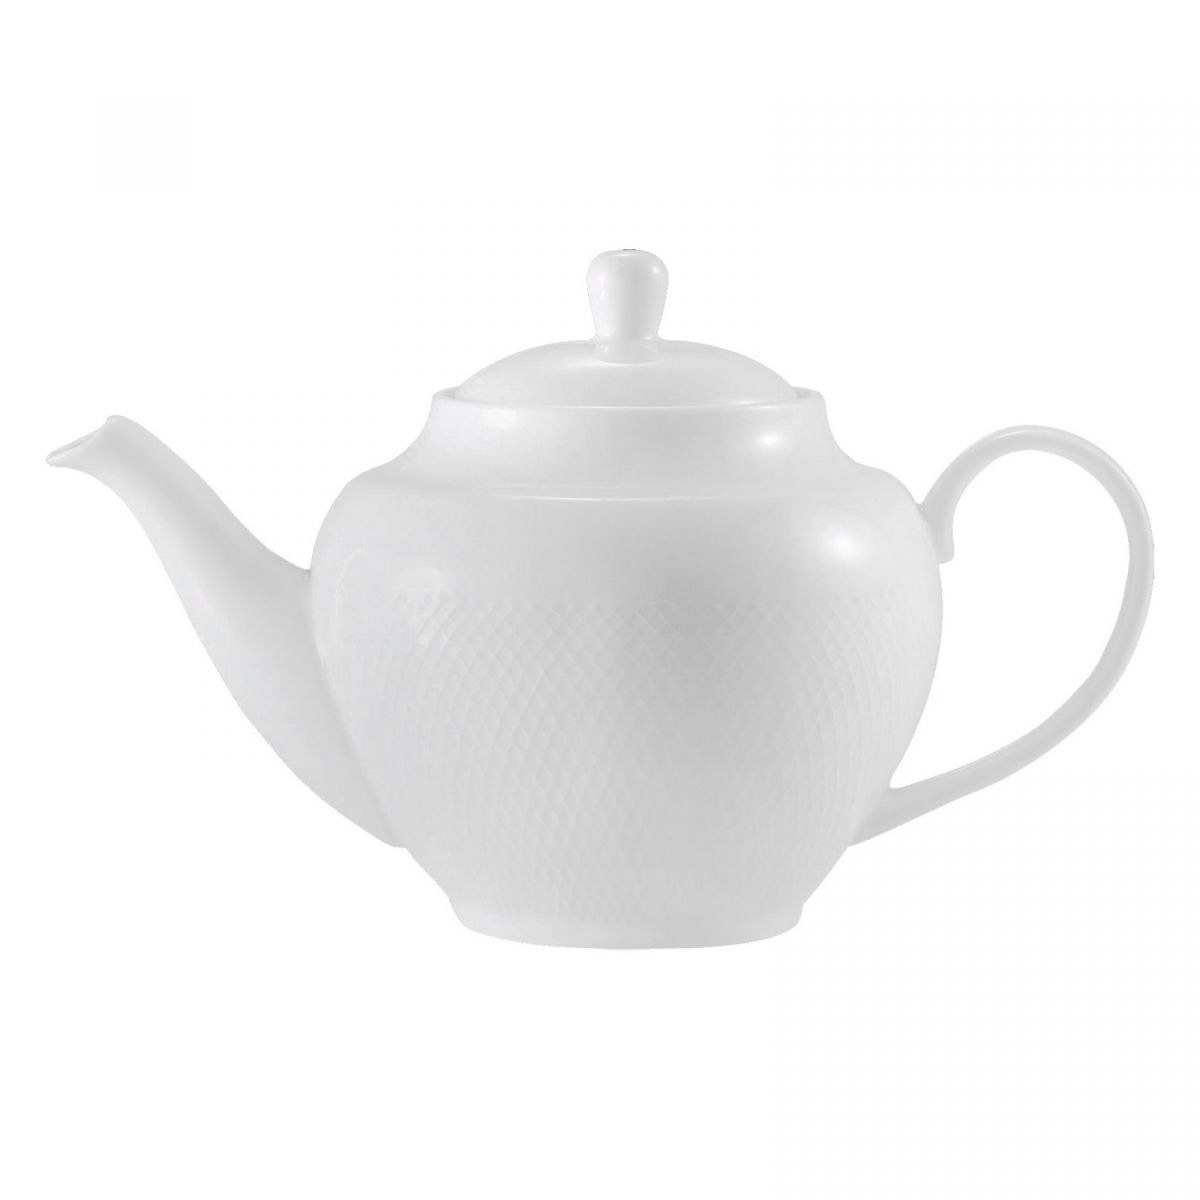 Заварочный чайник TUDOR ENGLAND Royal Sutton 0,99 л заварочный чайник tudor england royal circle 0 5 л